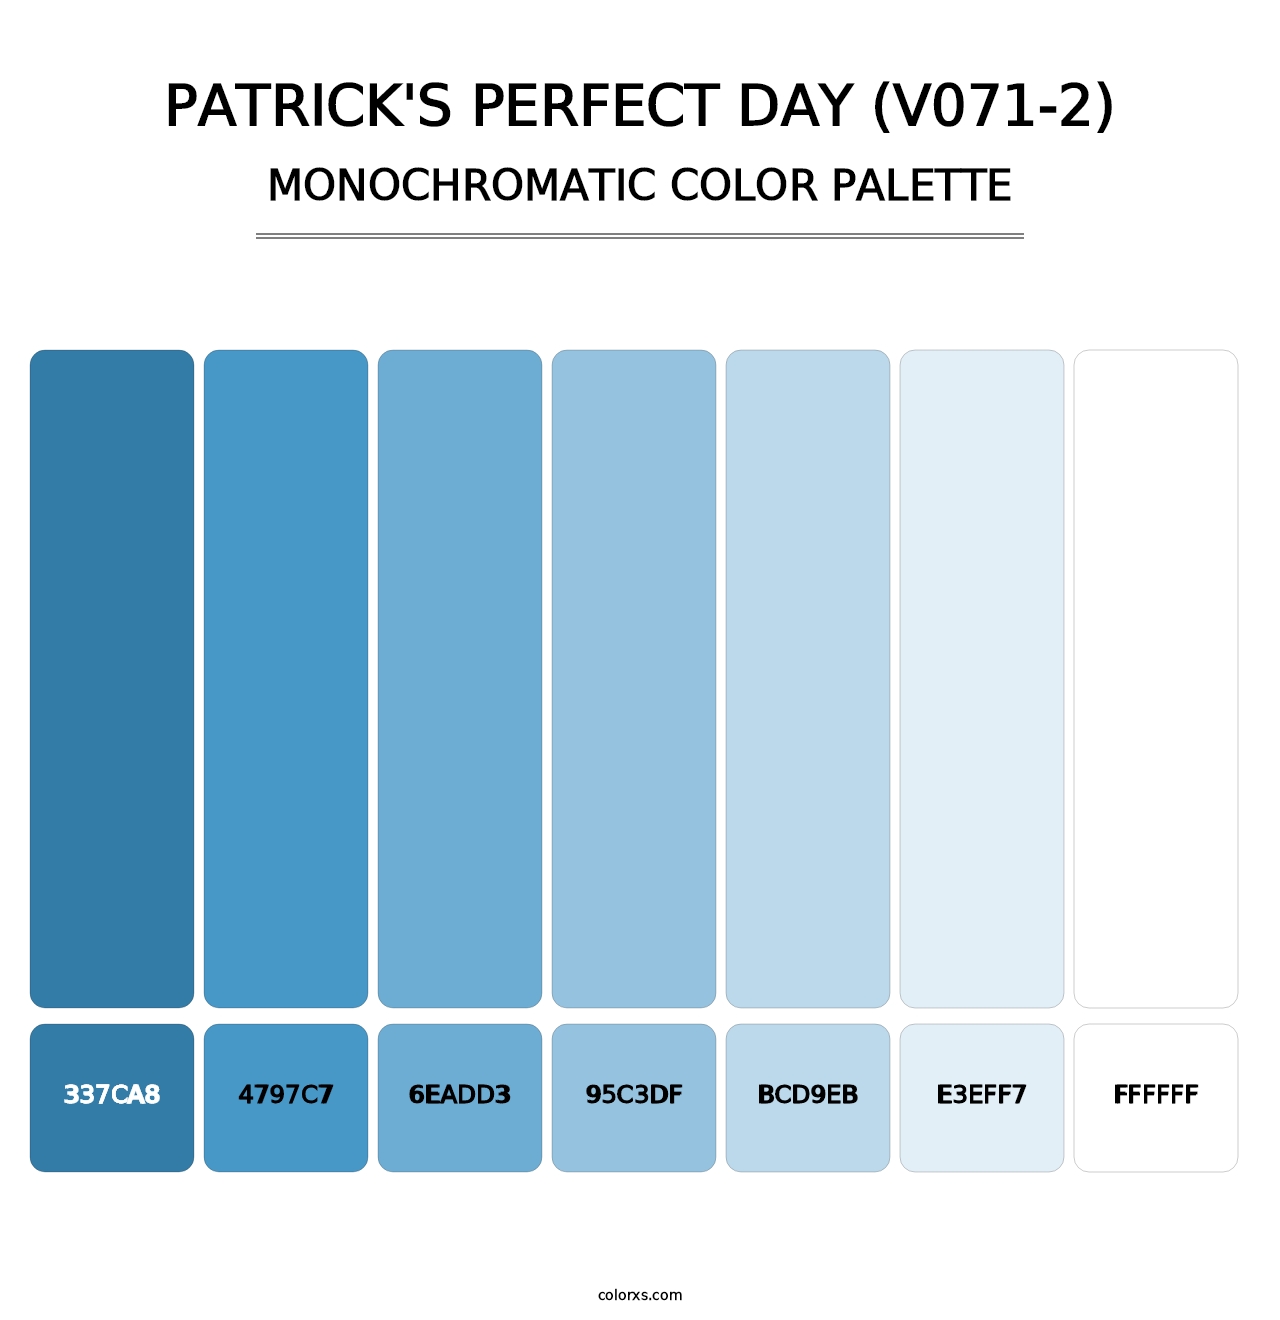 Patrick's Perfect Day (V071-2) - Monochromatic Color Palette